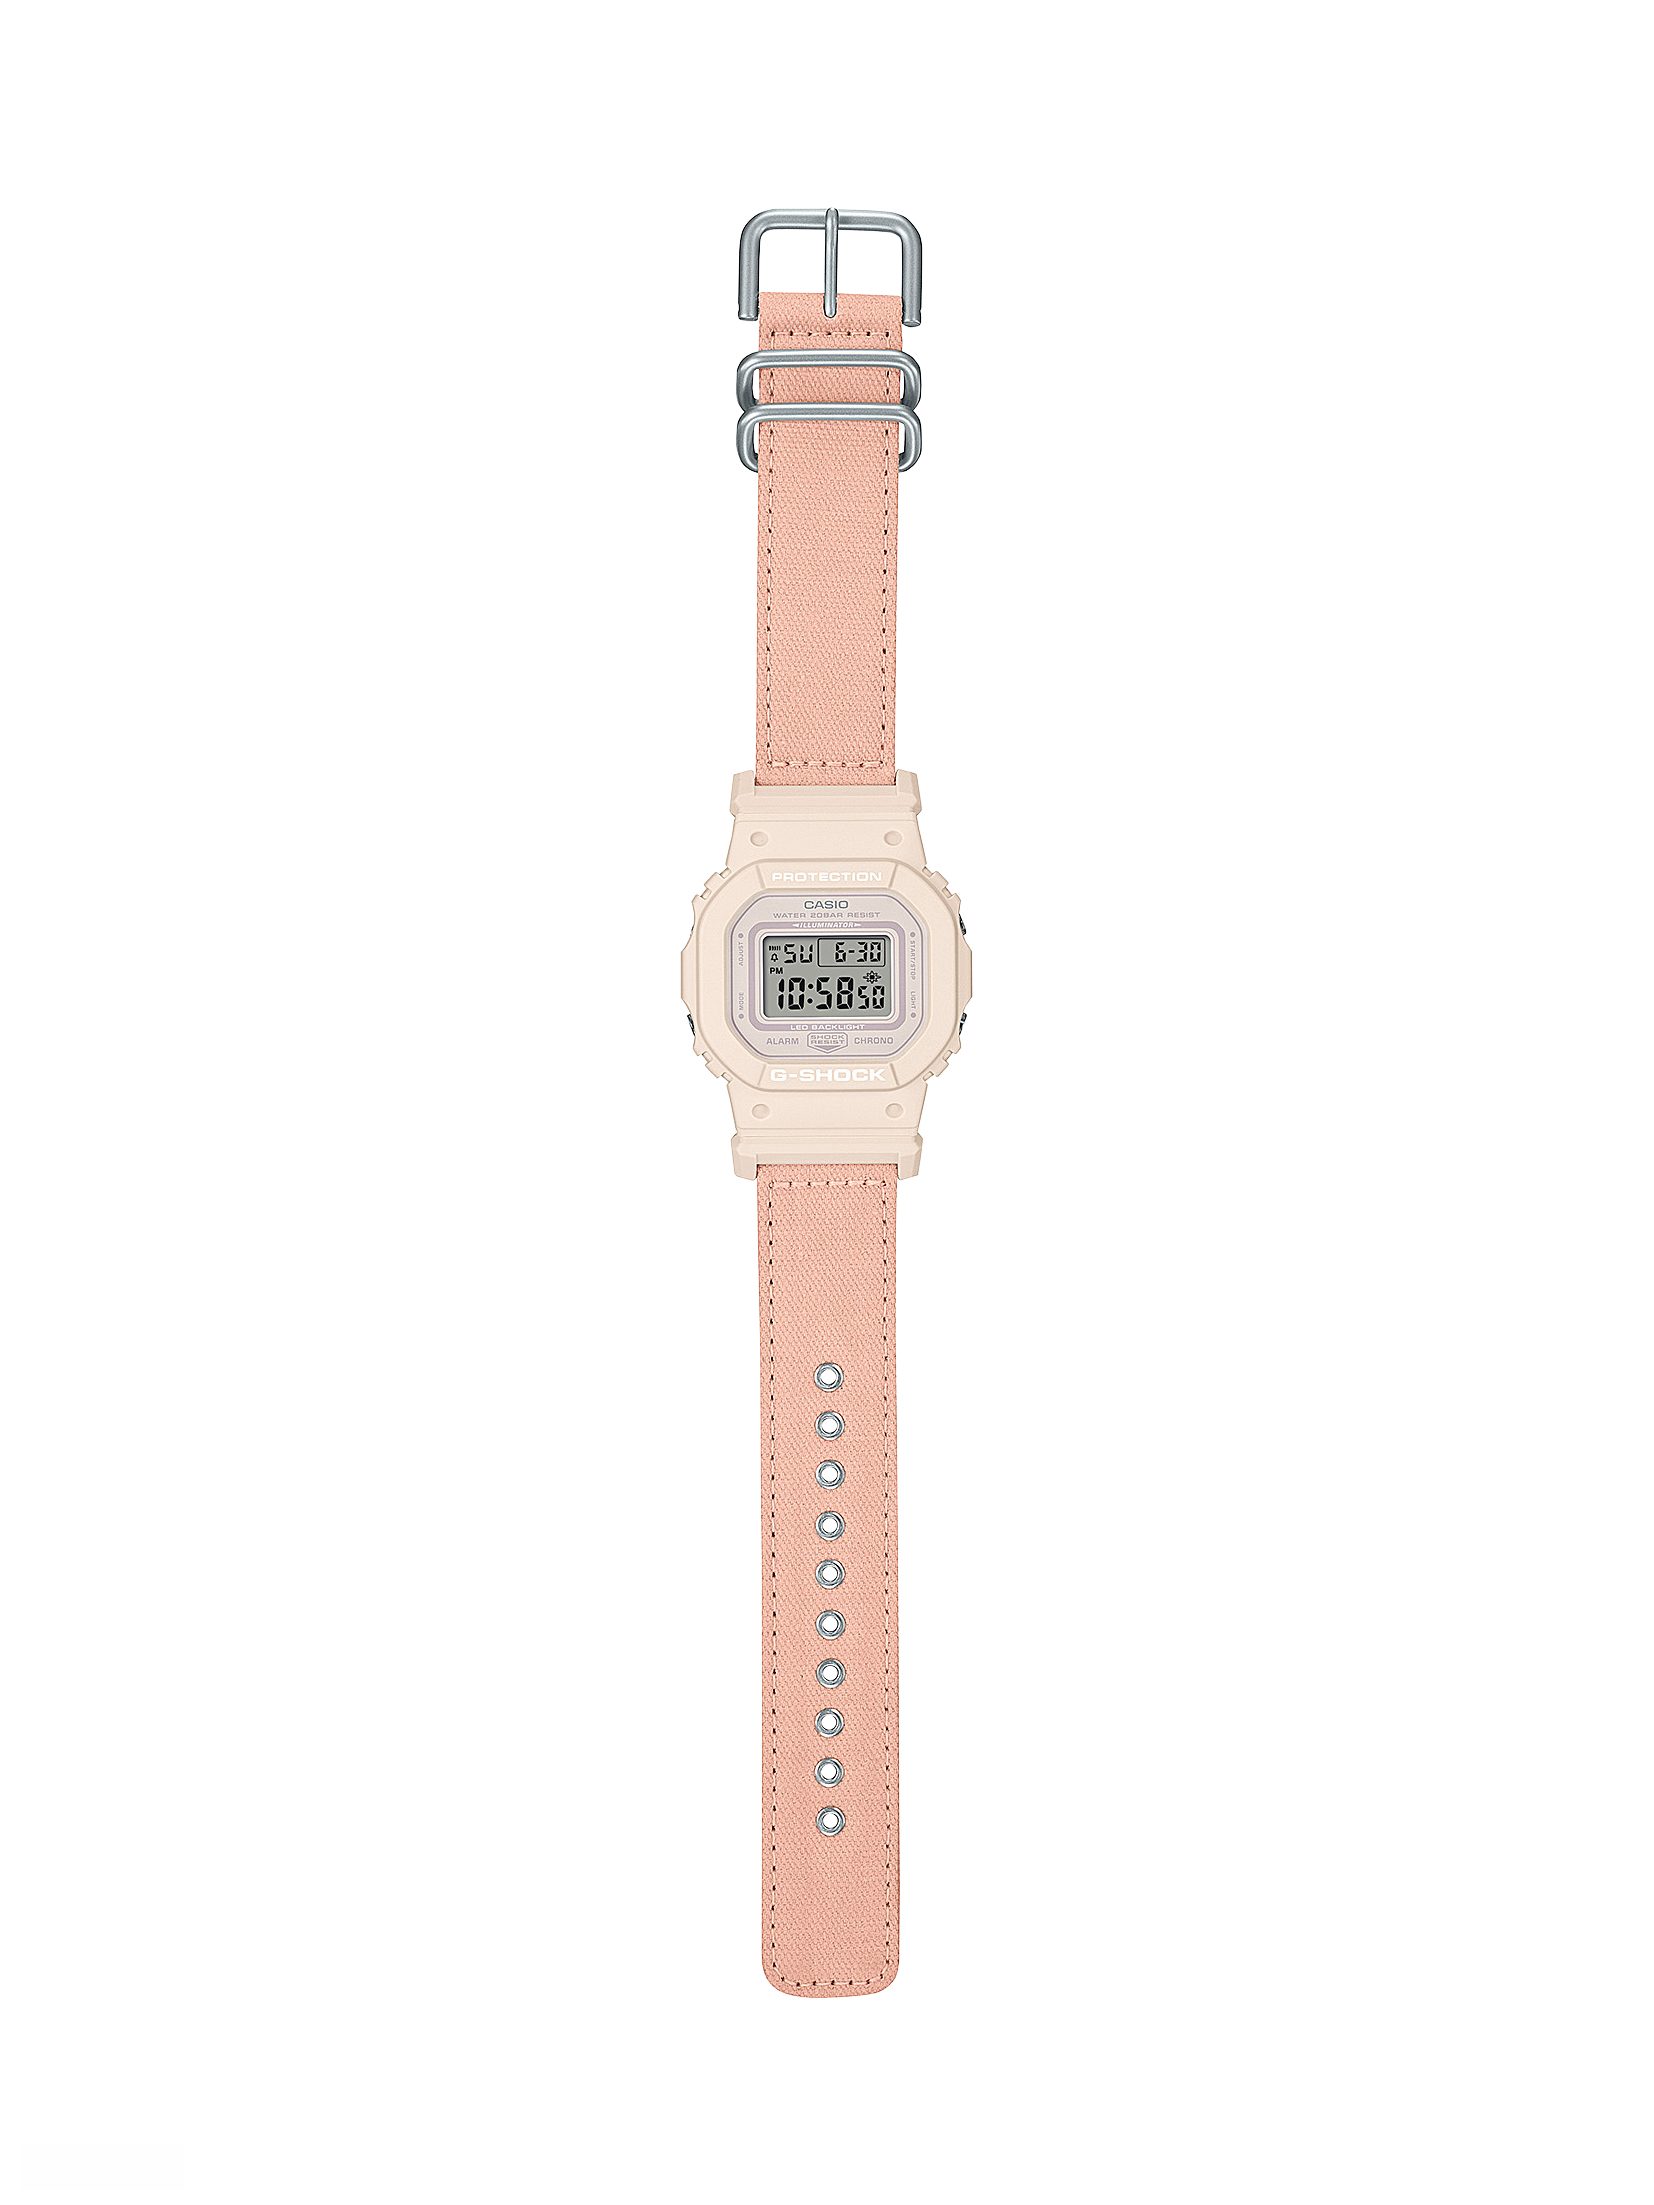 女錶 GMD S5600CT 4建議售價NT3800 2